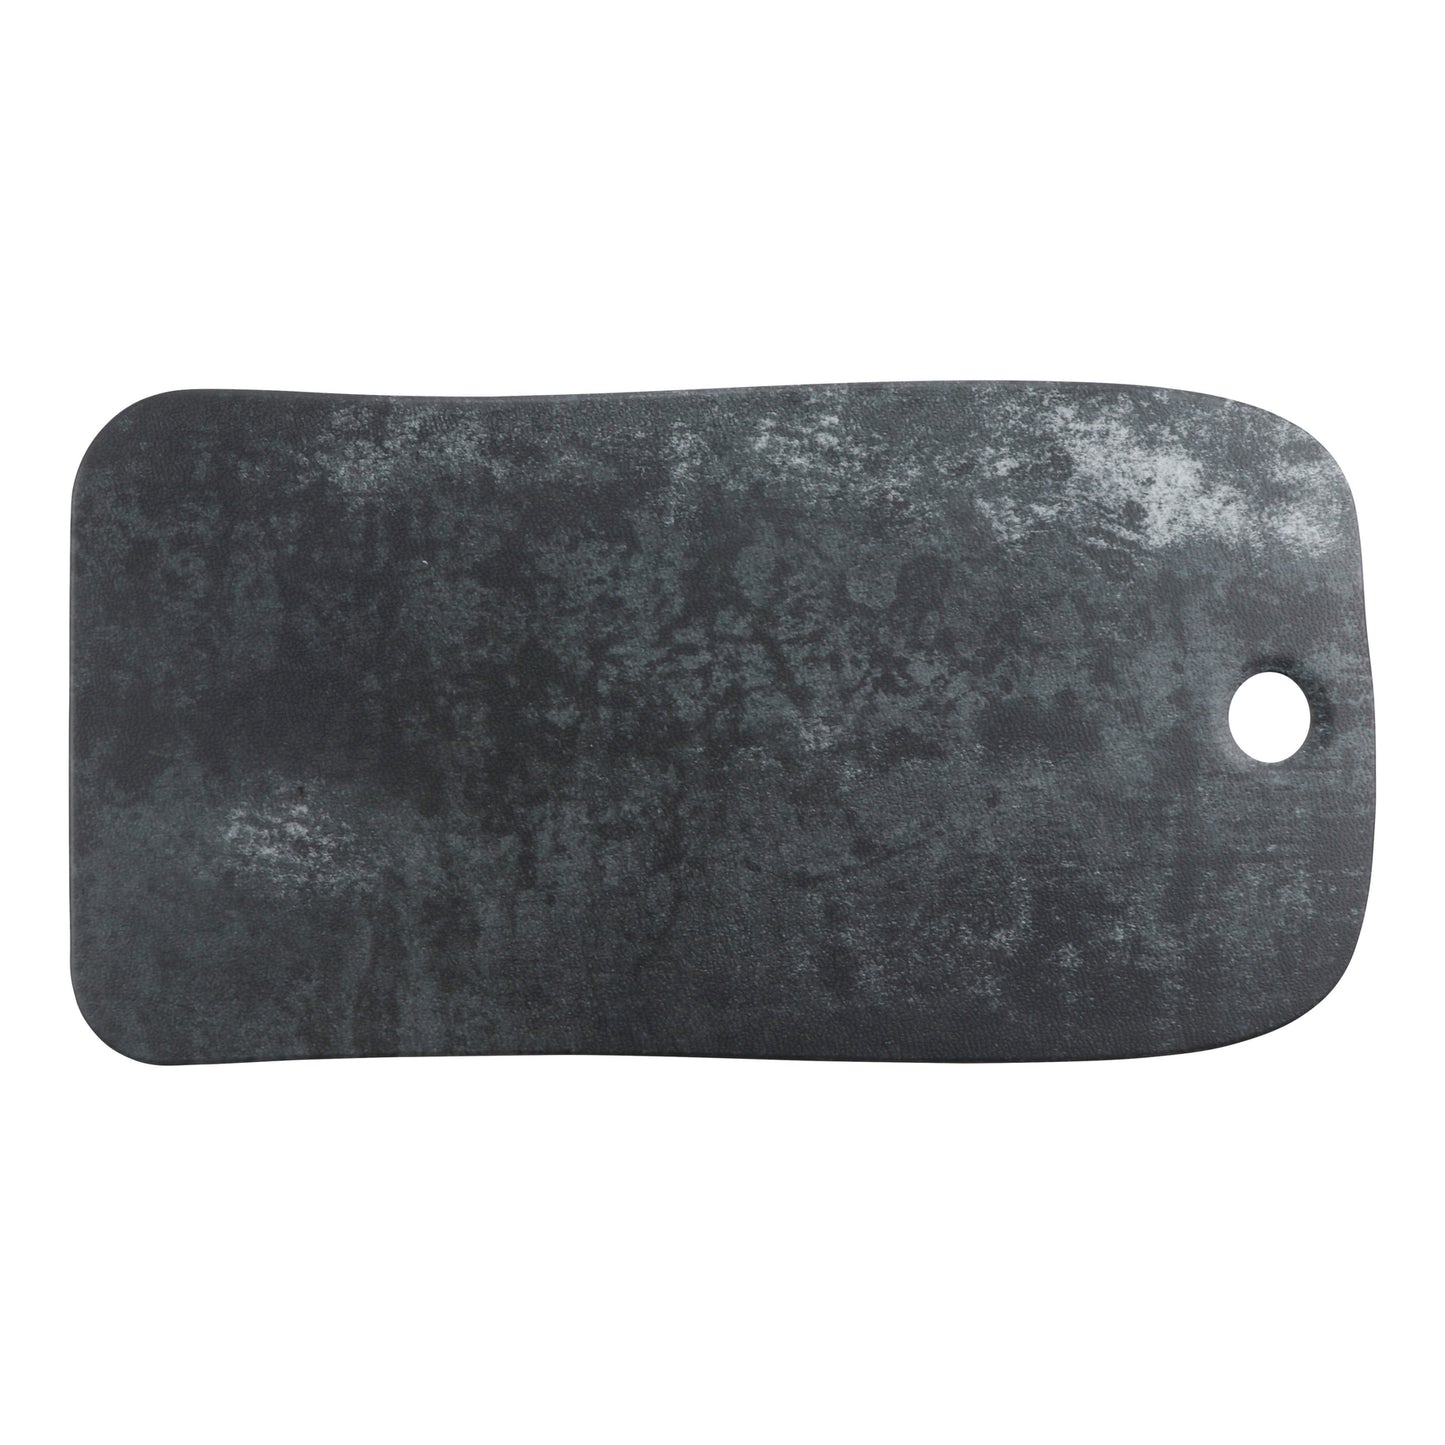 15" lapis grey granite melamine board (medium), 15"L x 8.75"W, x .5"H, GET, cheforward